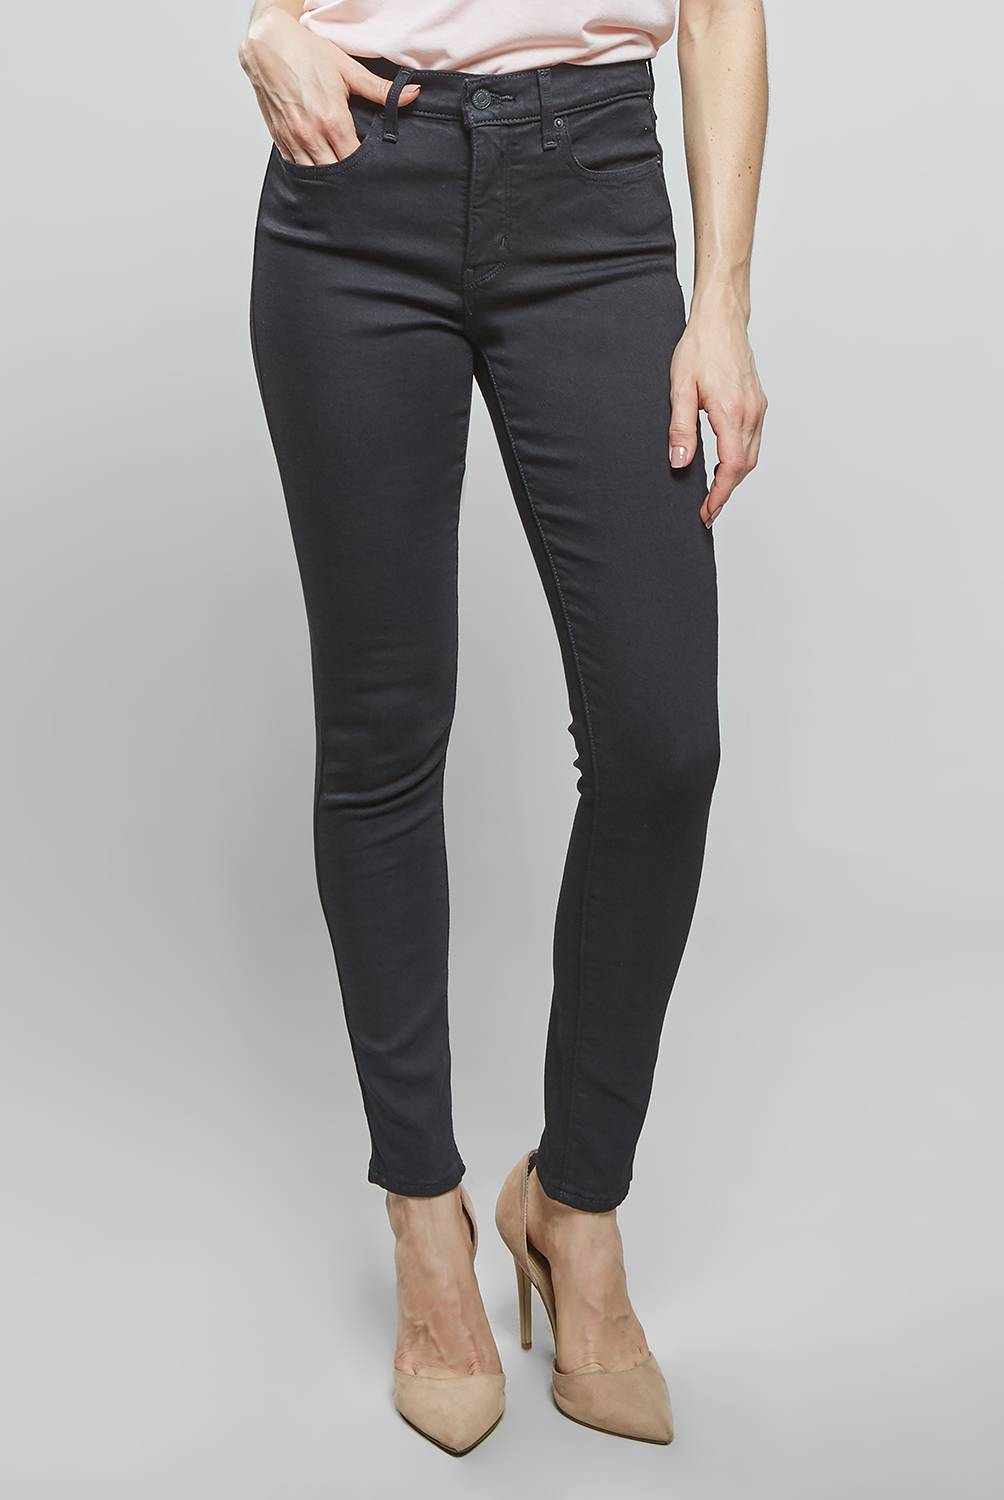 LEVIS - Jeans Skinny Tiro Medio Mujer